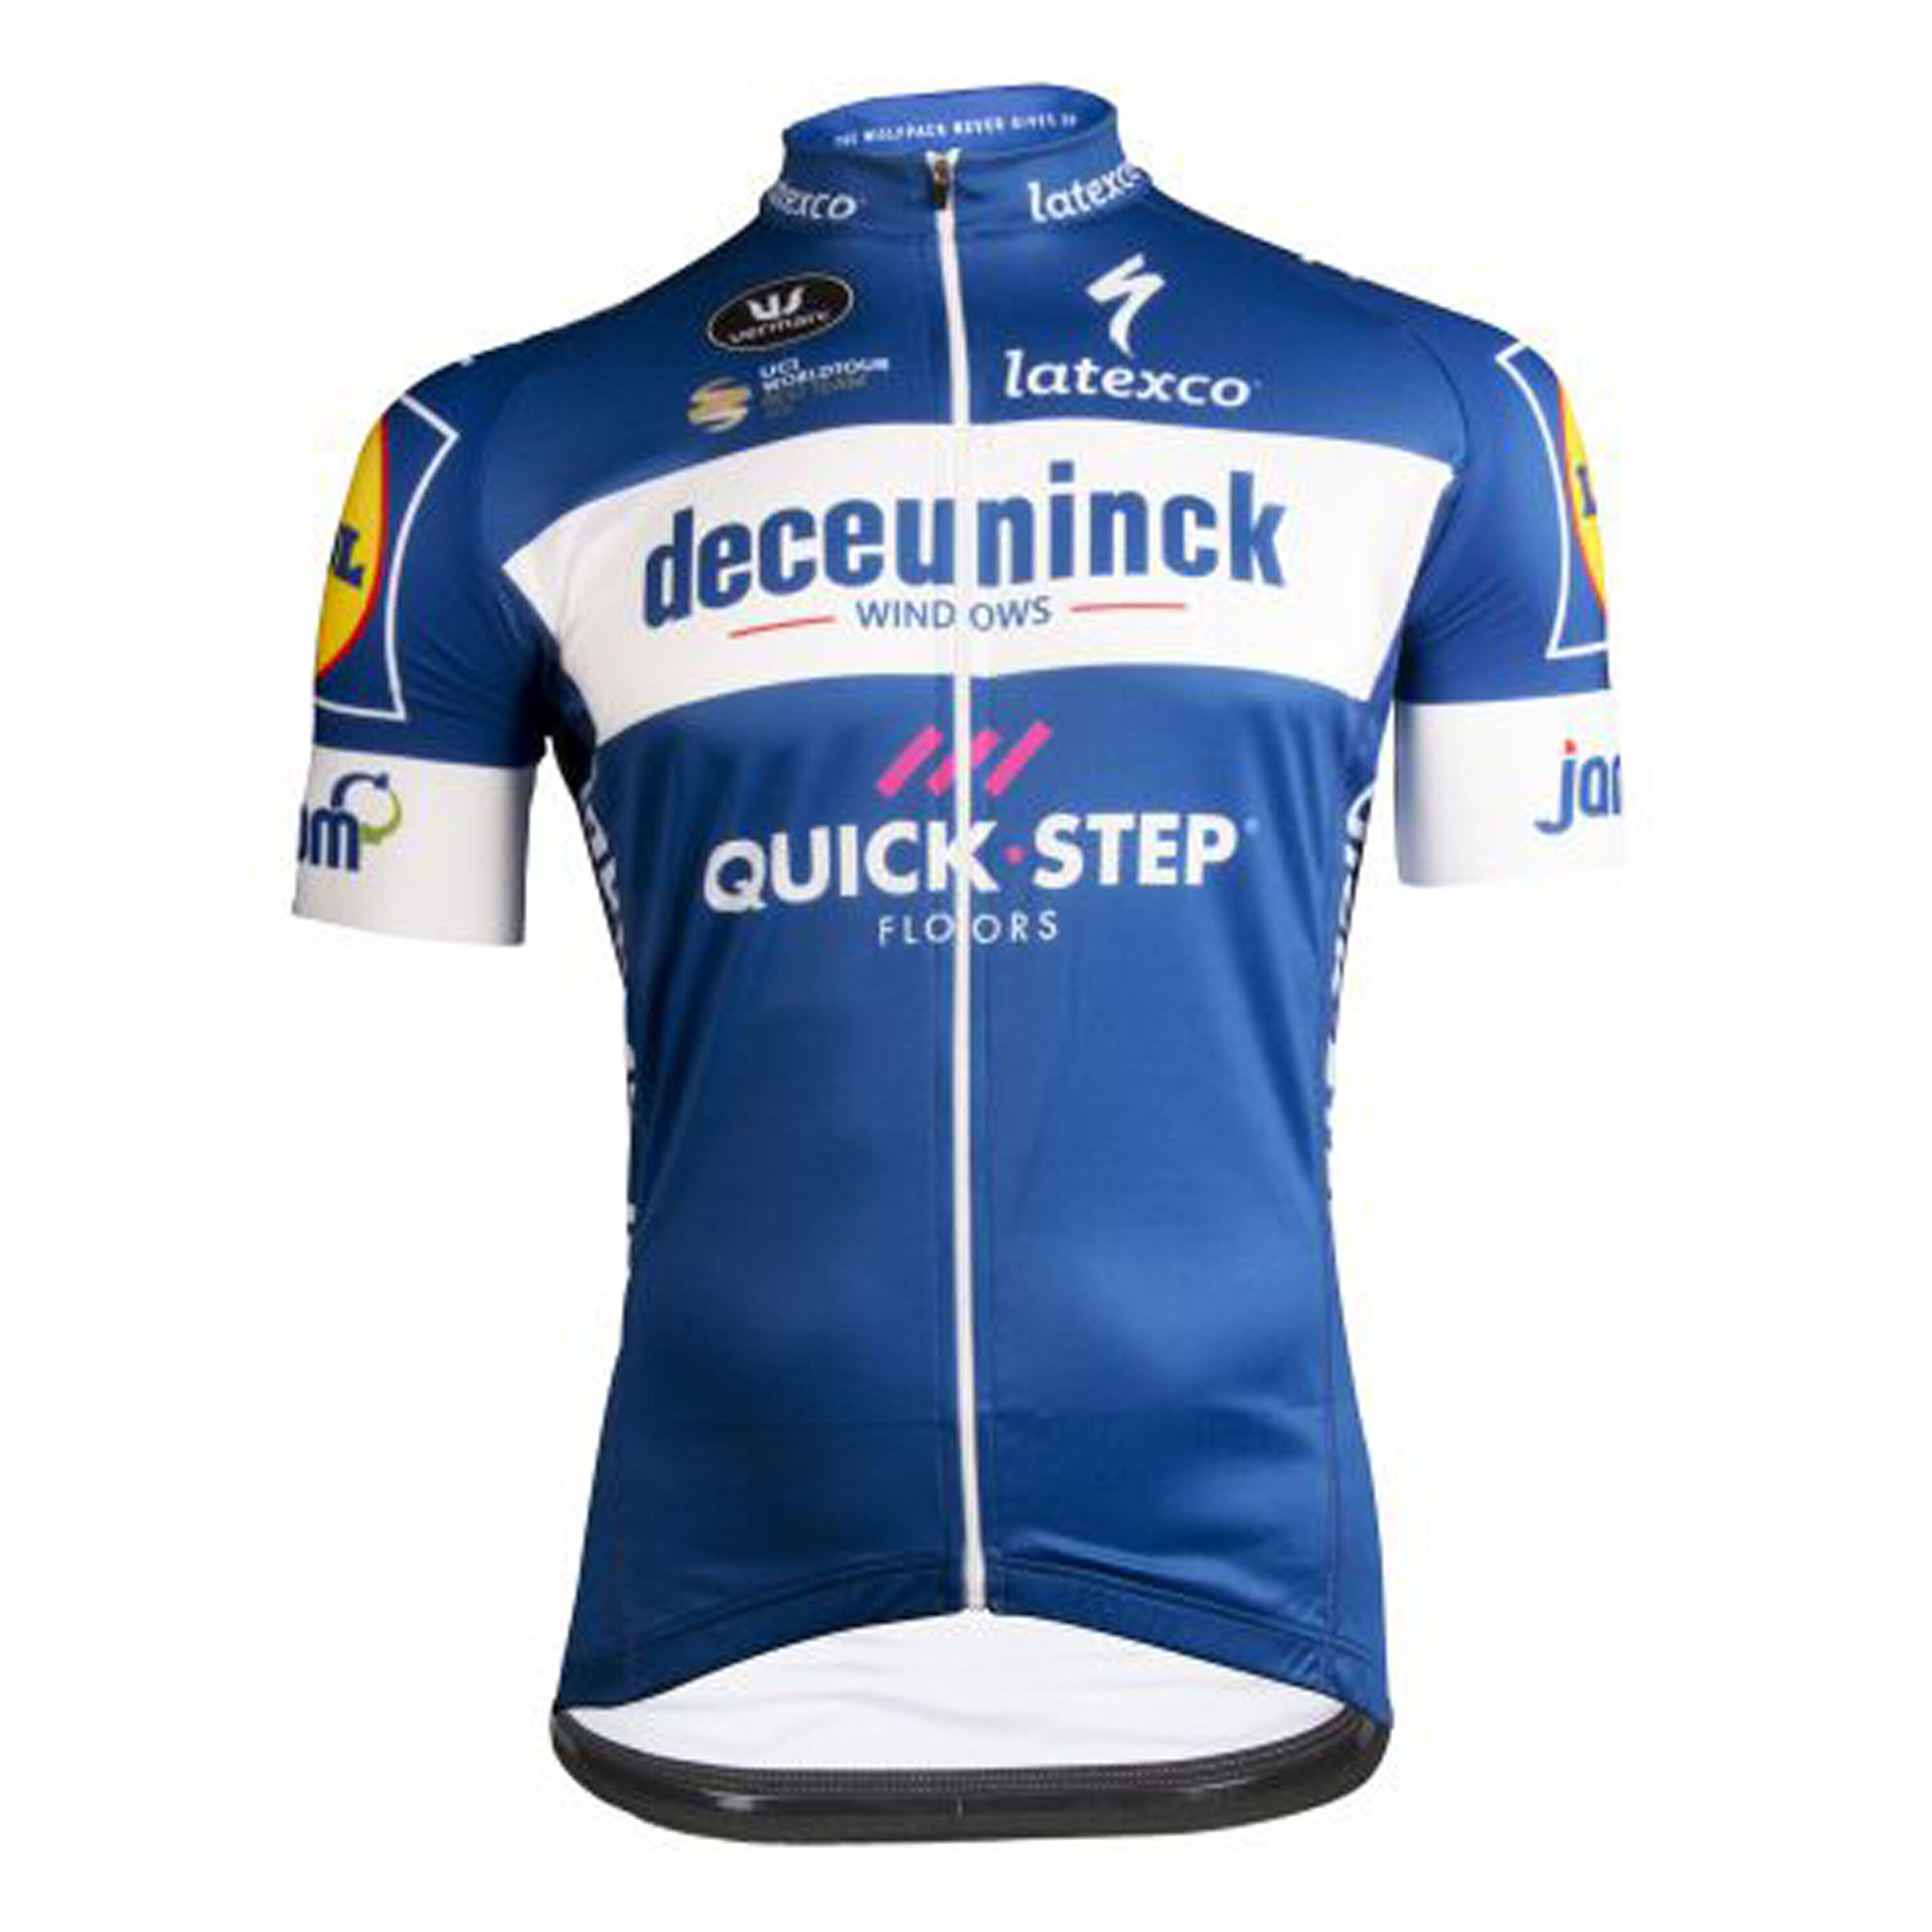 Vermarc ES.L Deceuninck Quick-Step jersey LordGun online bike store